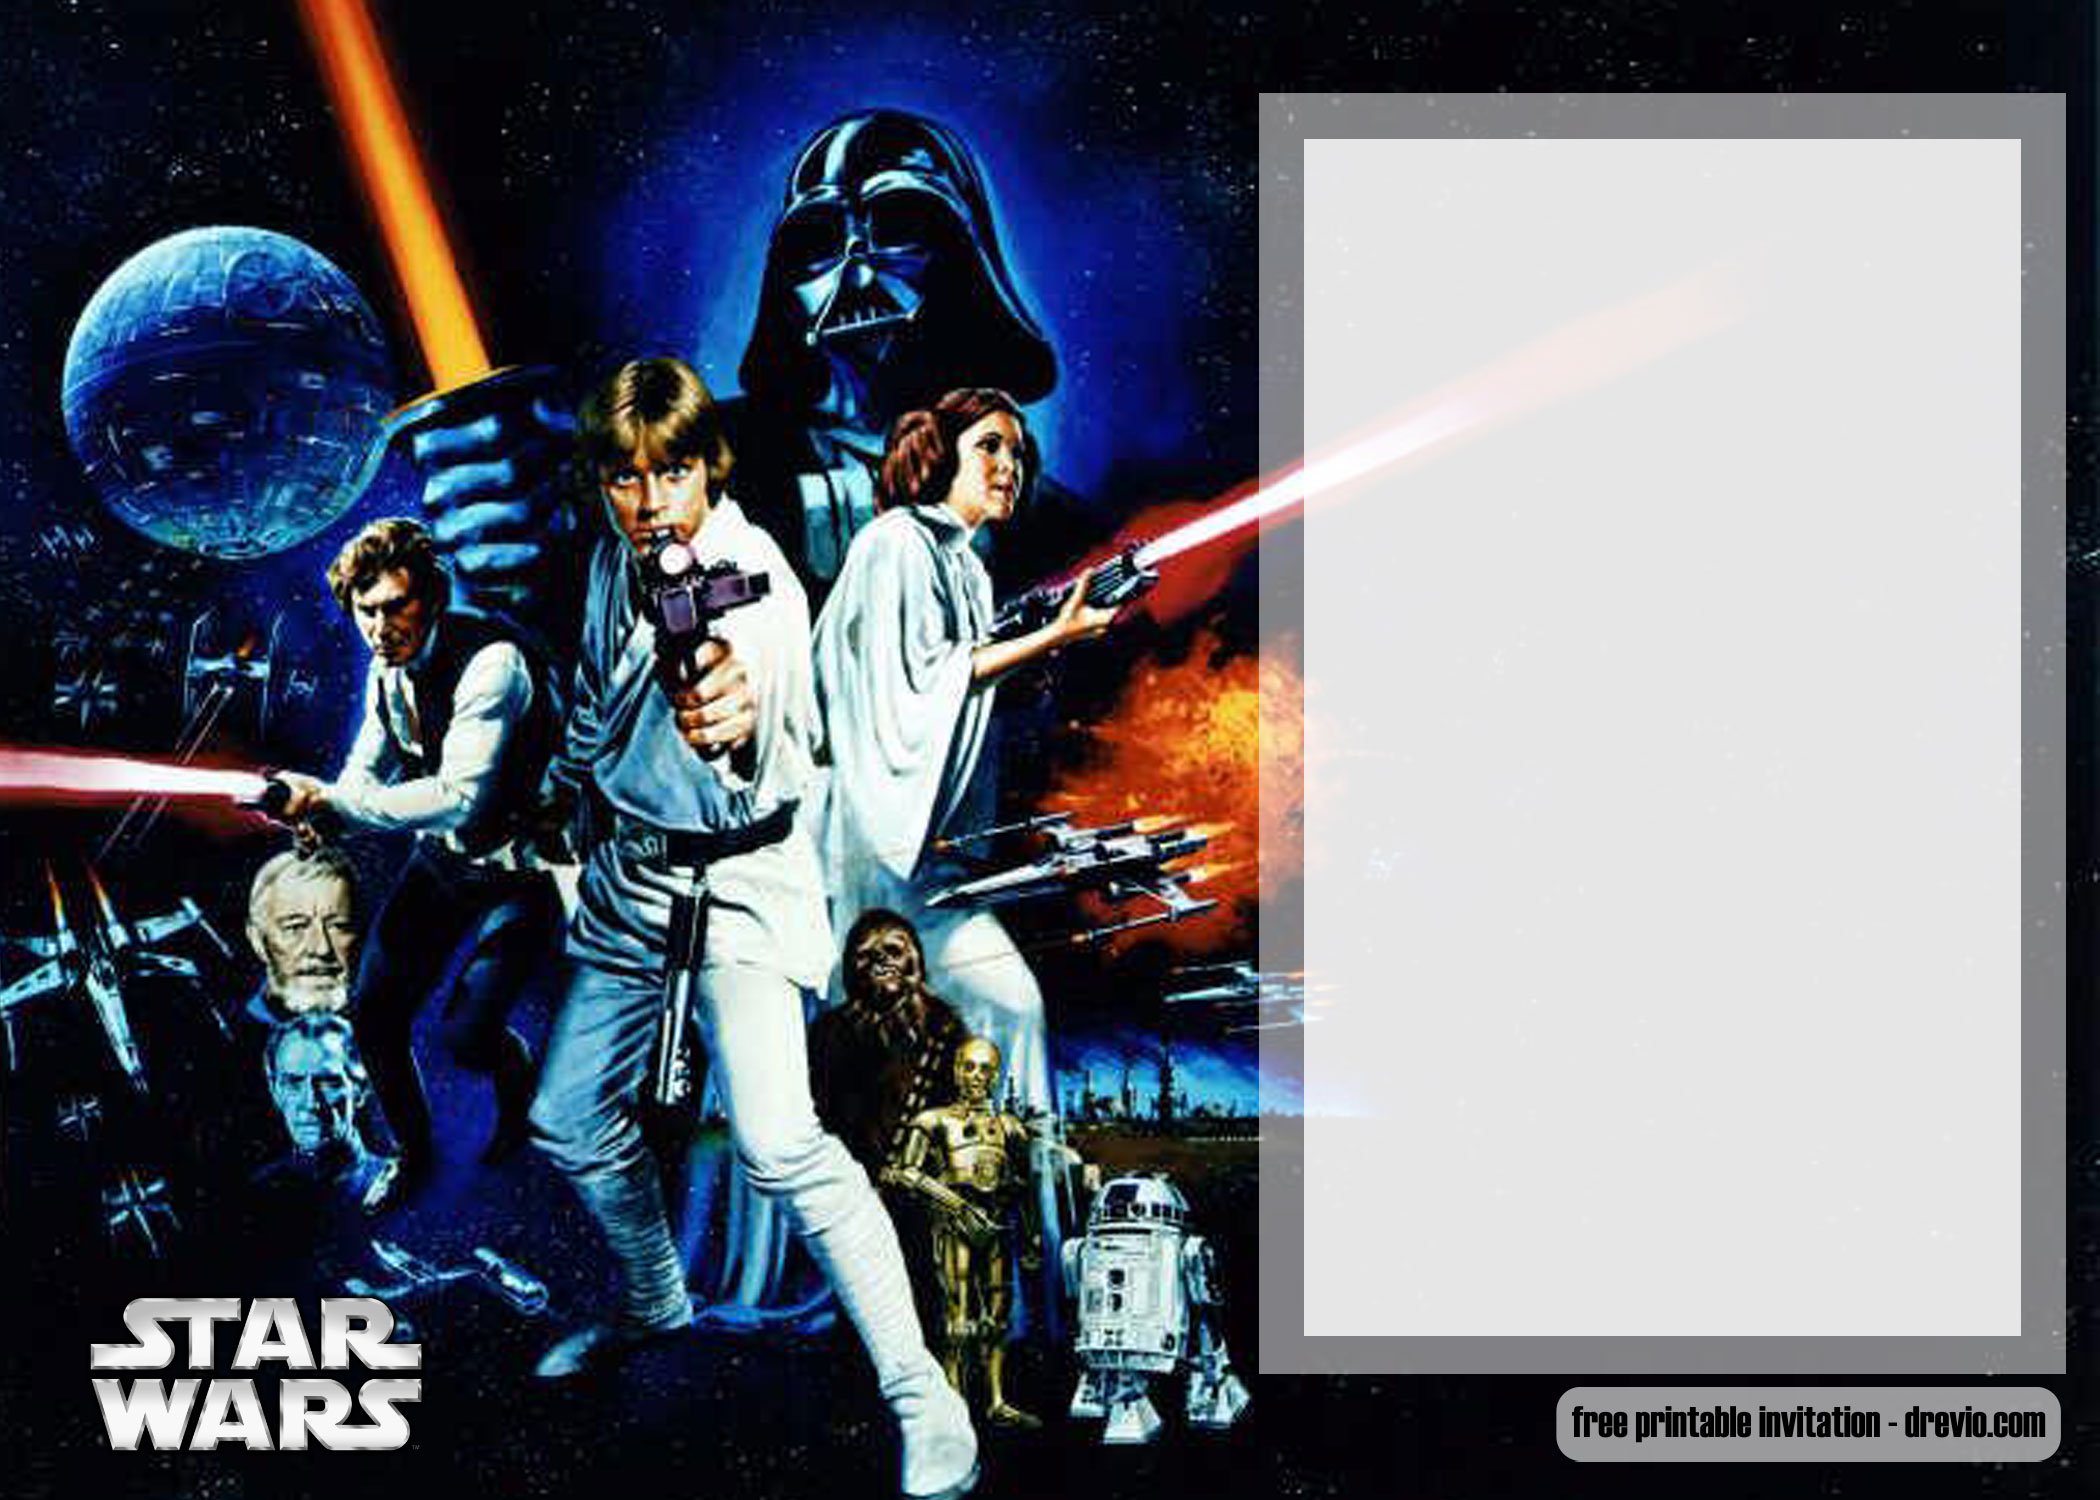 FREE Printable Star Wars Invitation Templates Download Hundreds FREE PRINTABLE Birthday